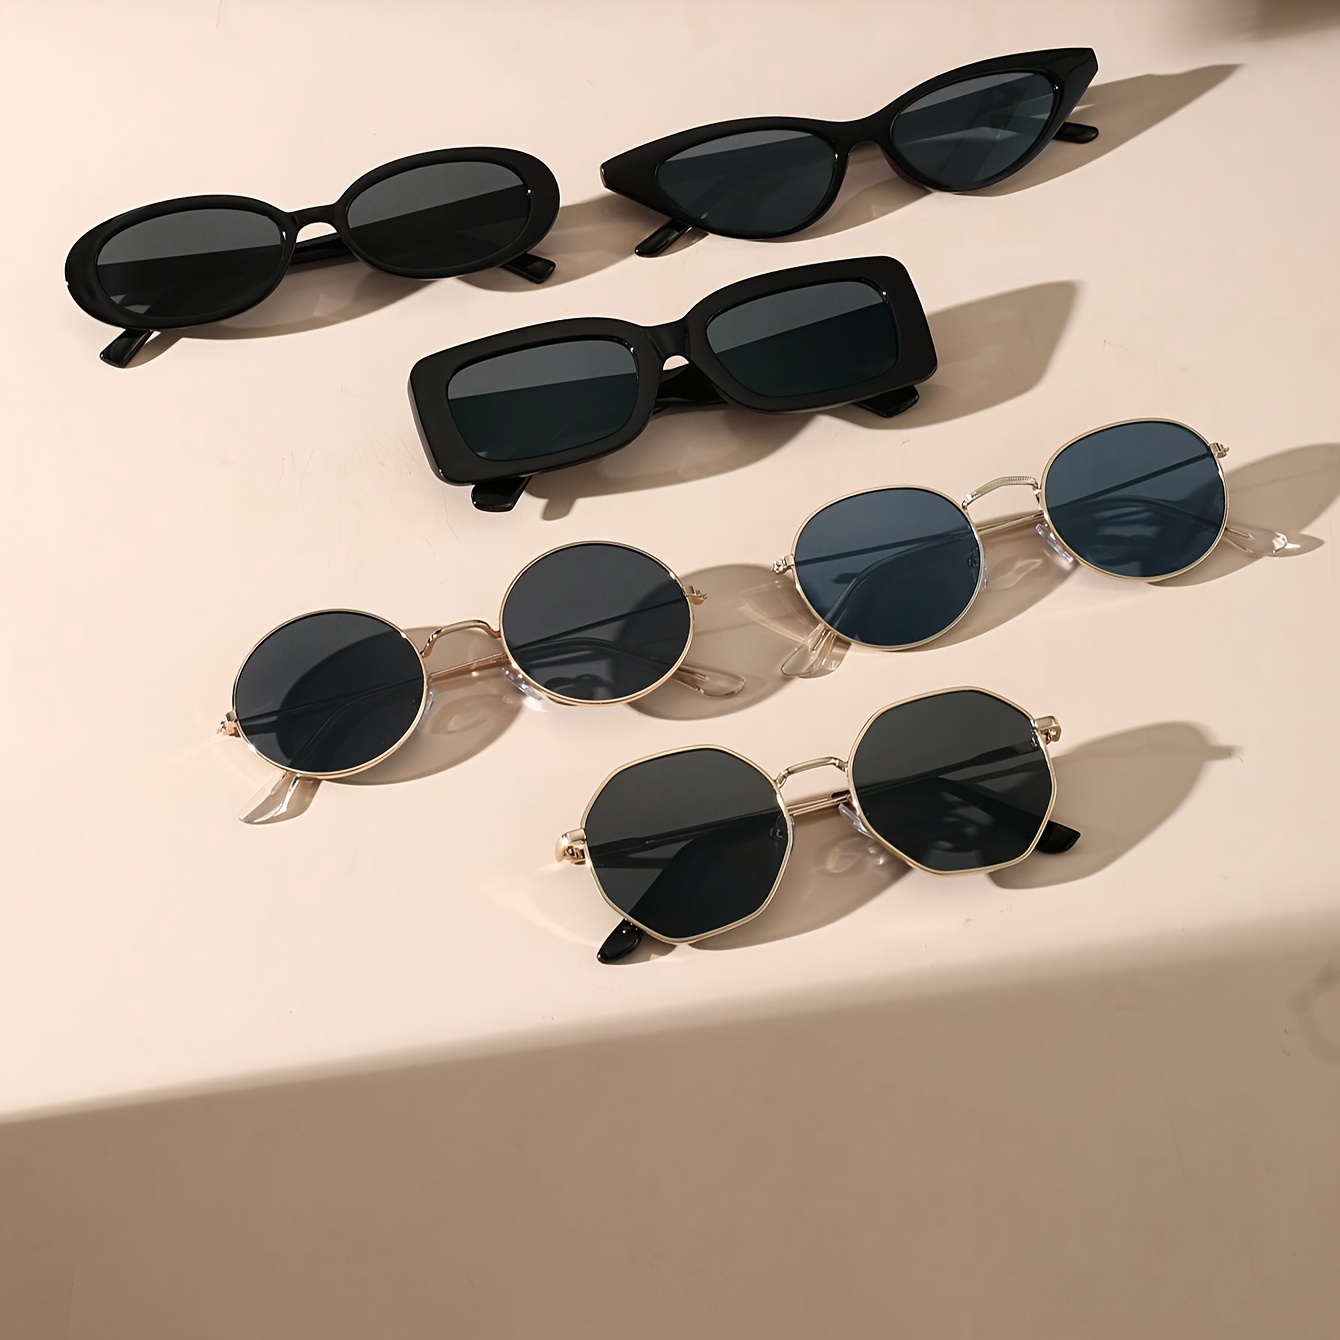 

6pcs Women Fashion Glasses Casual Different Frames Anti Glare Sun Shades For Beach Holiday Fashion Glasses